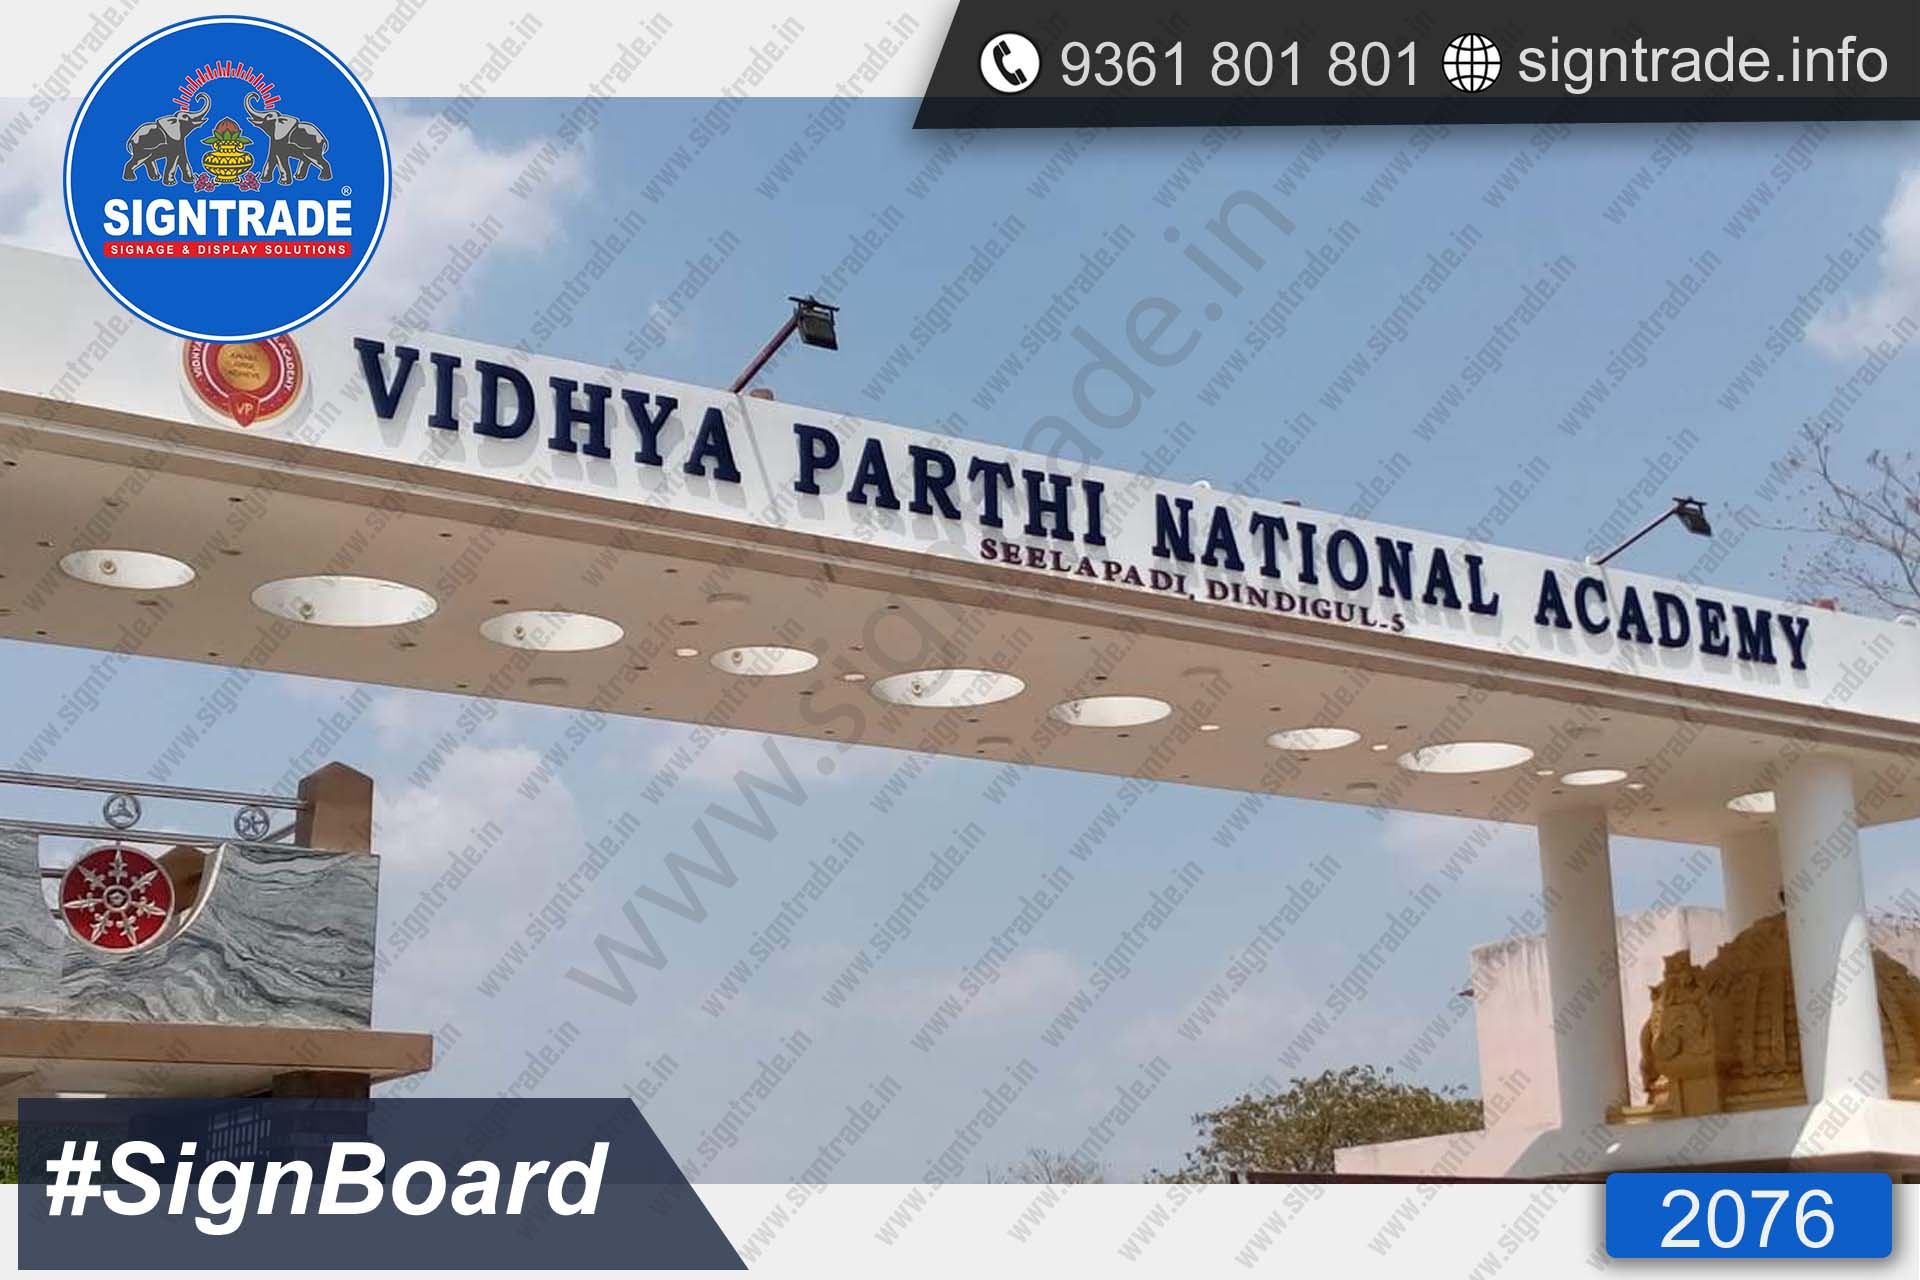 vidhya parthi national academy sign board